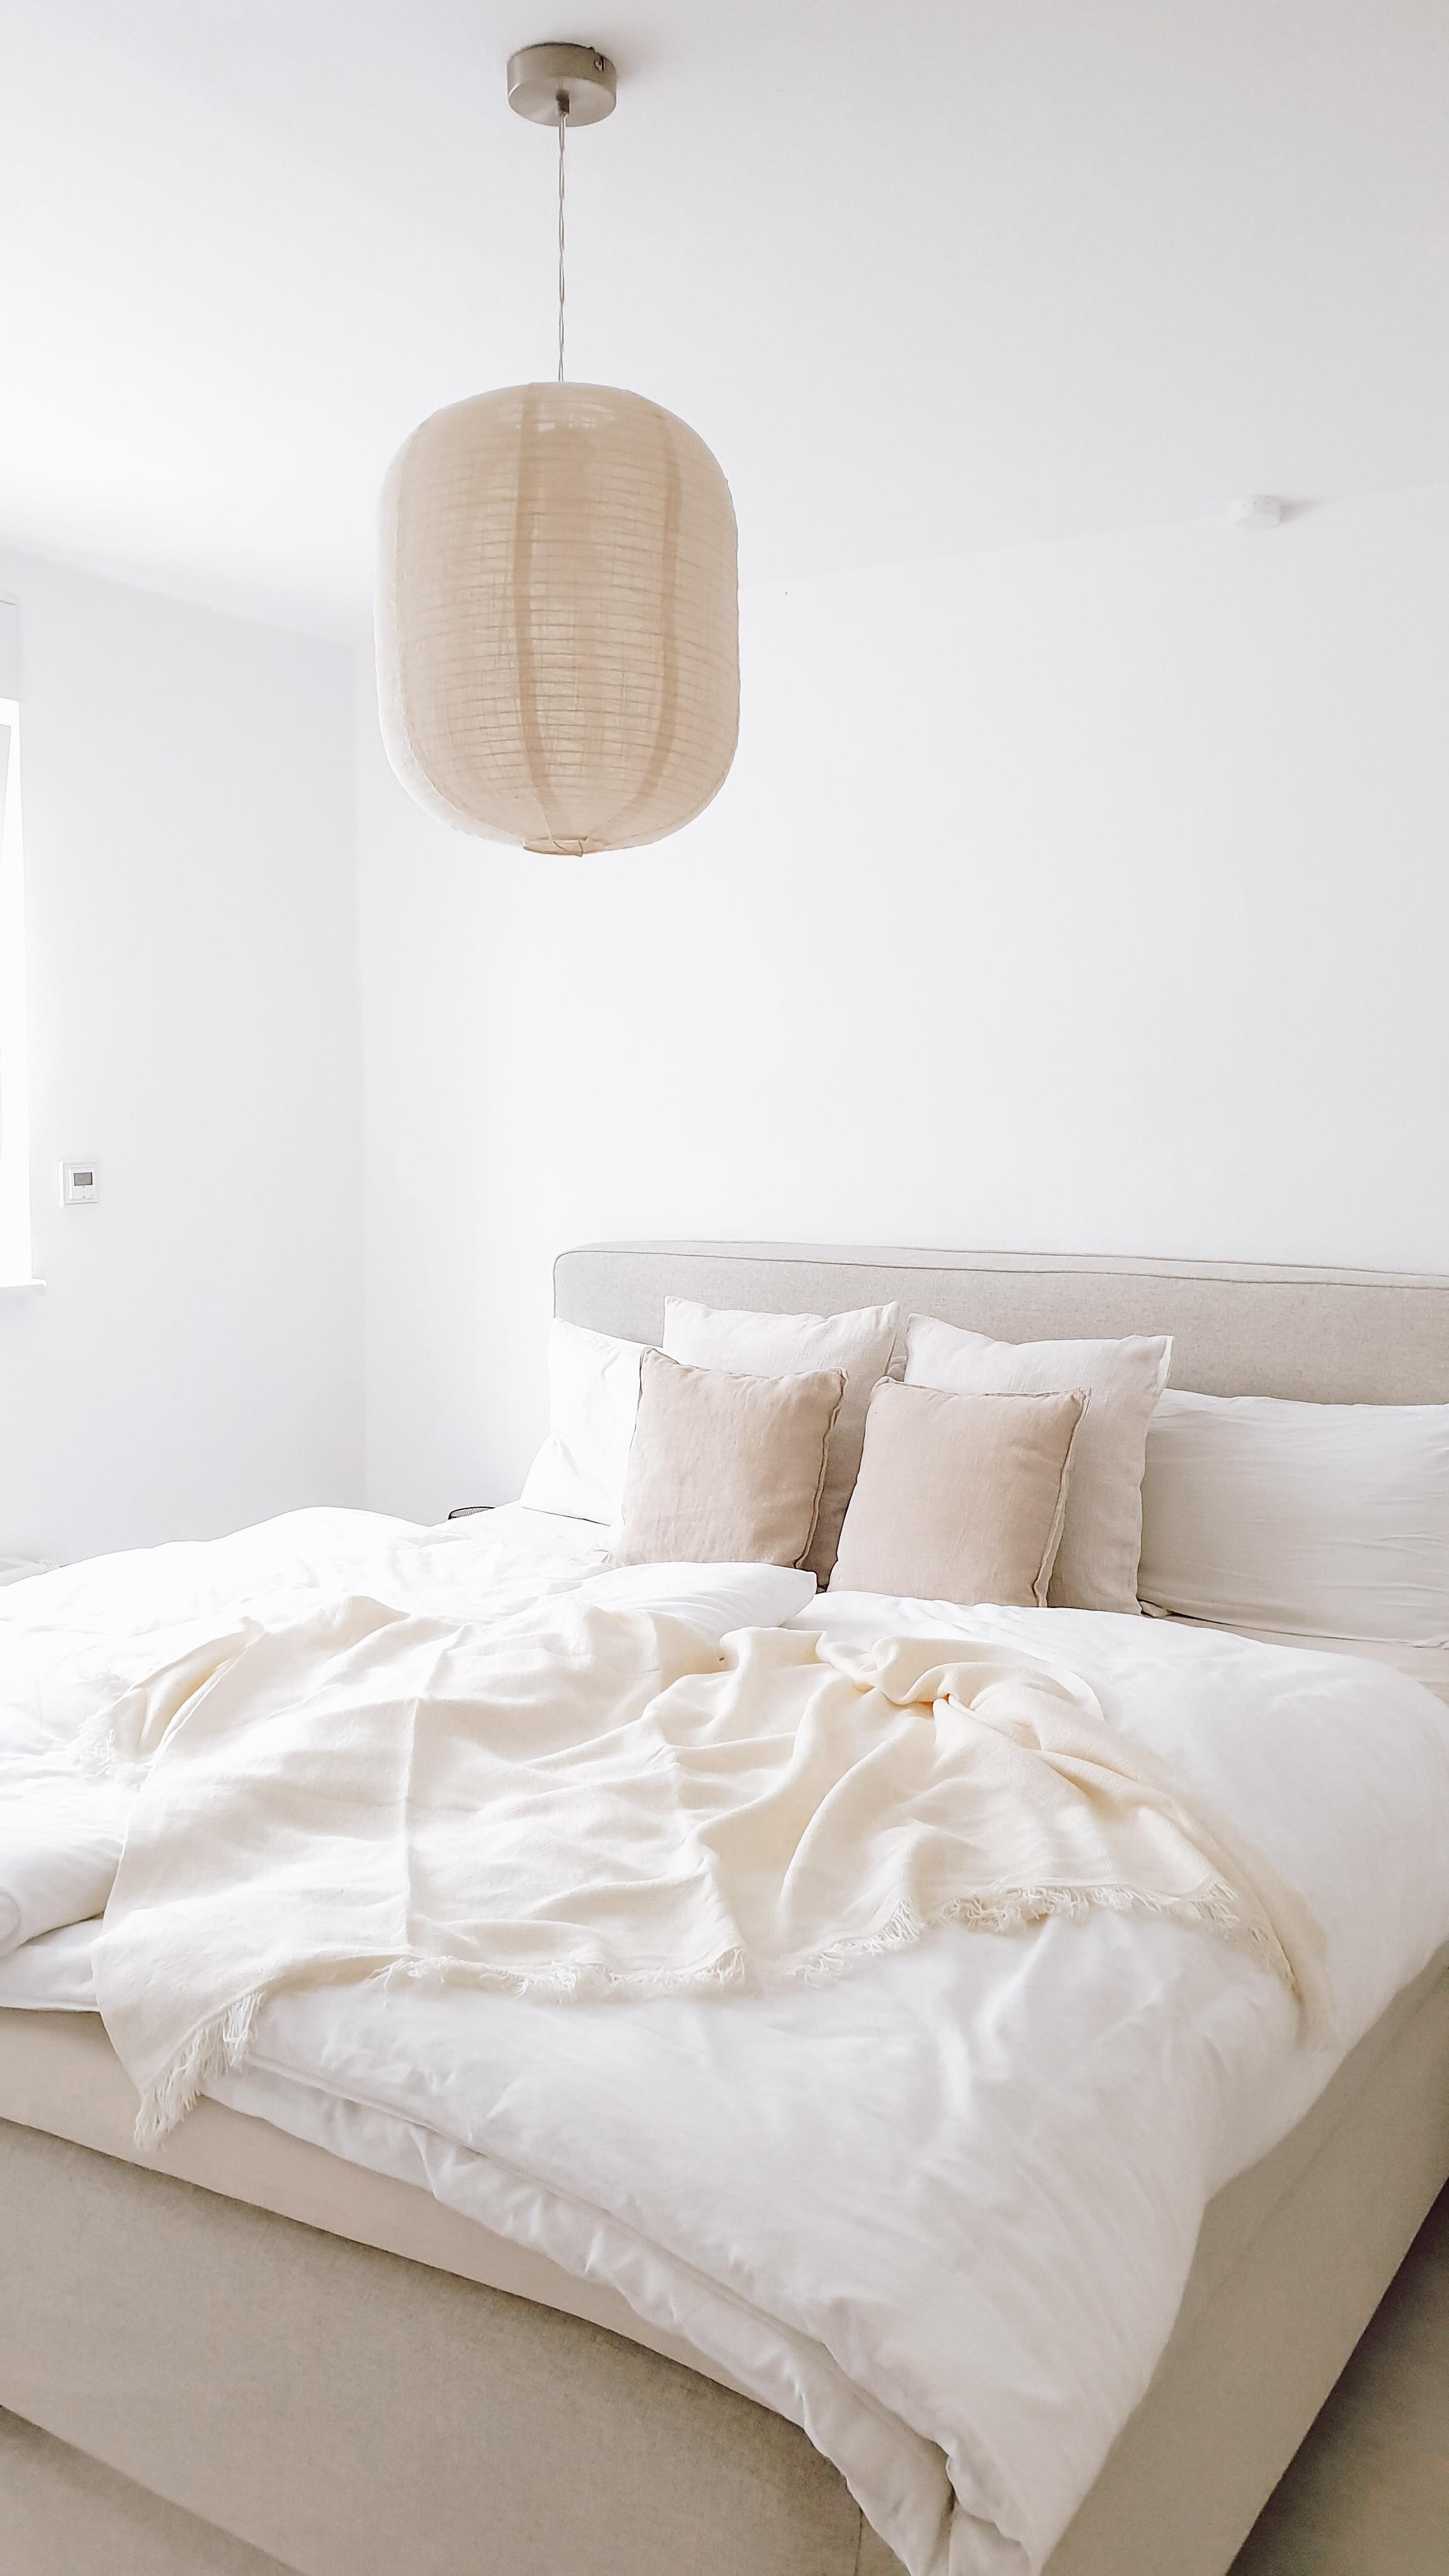 Unser Schlafzimmer 🤍
#schlafzimmer #bedroomdetails #bedroomdecor #mybdrm #bedroom #Boxspringbett 